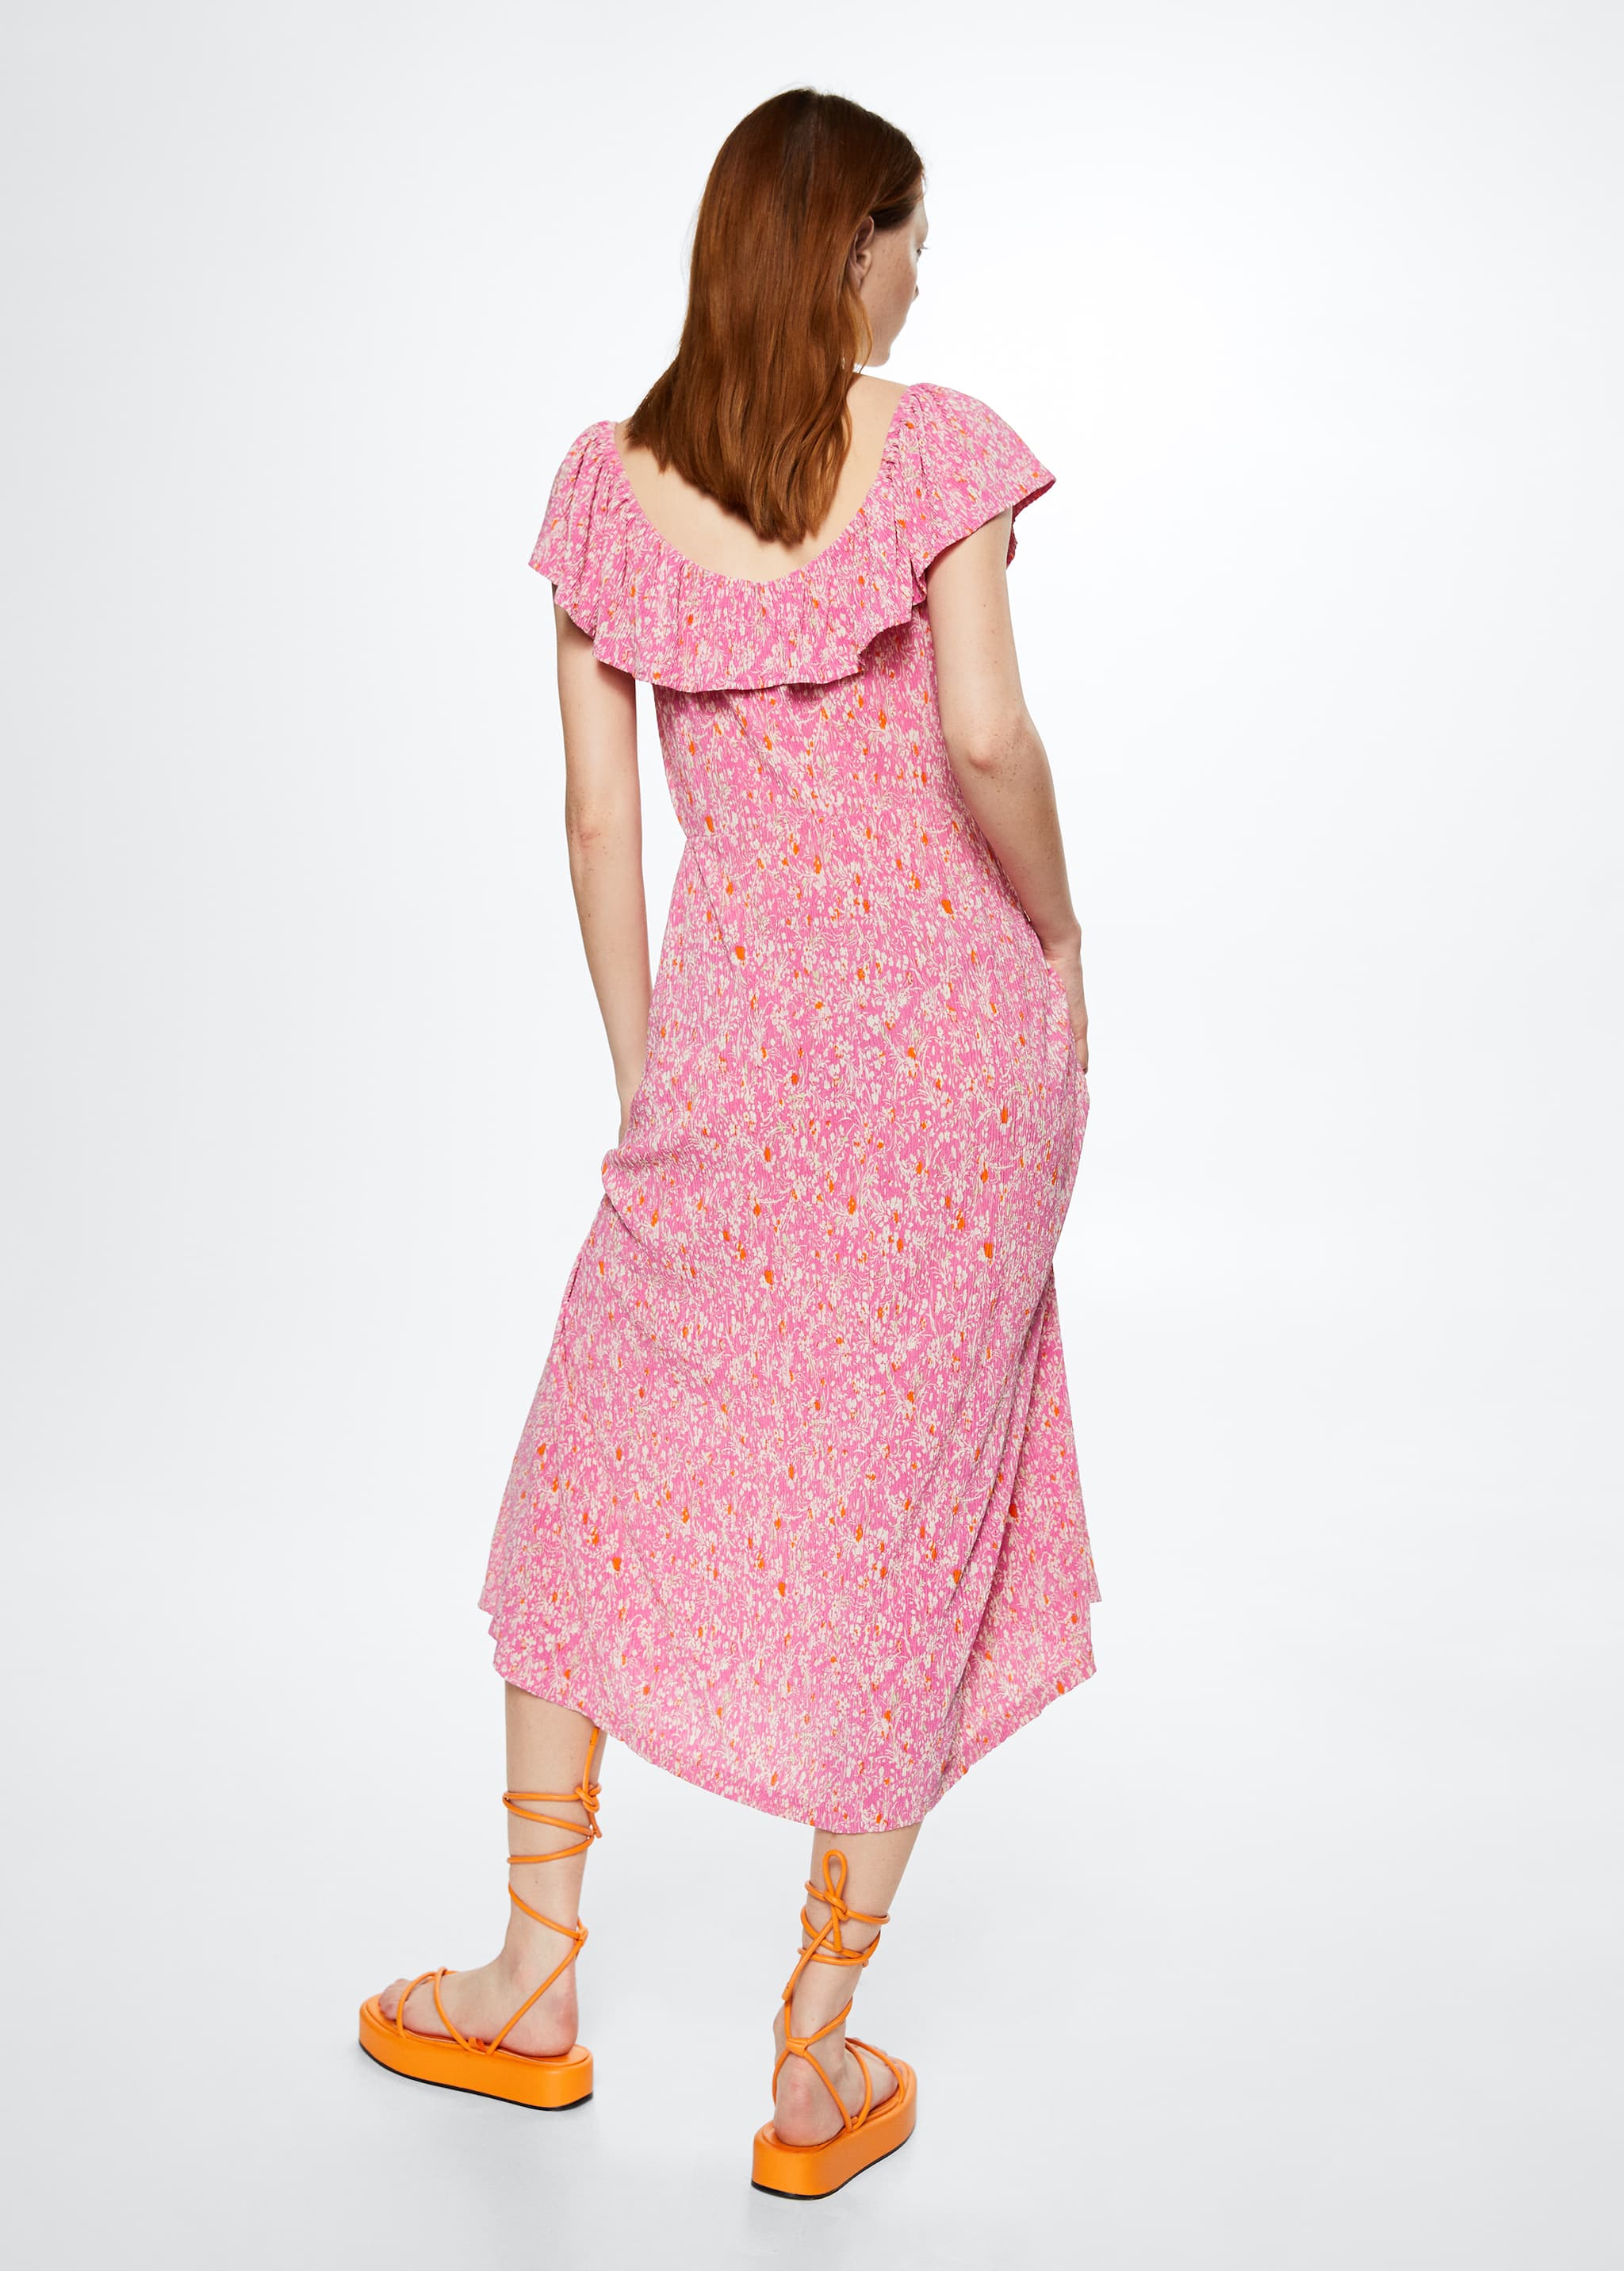 Kleid mit floralem Dessin - Rückseite des Artikels